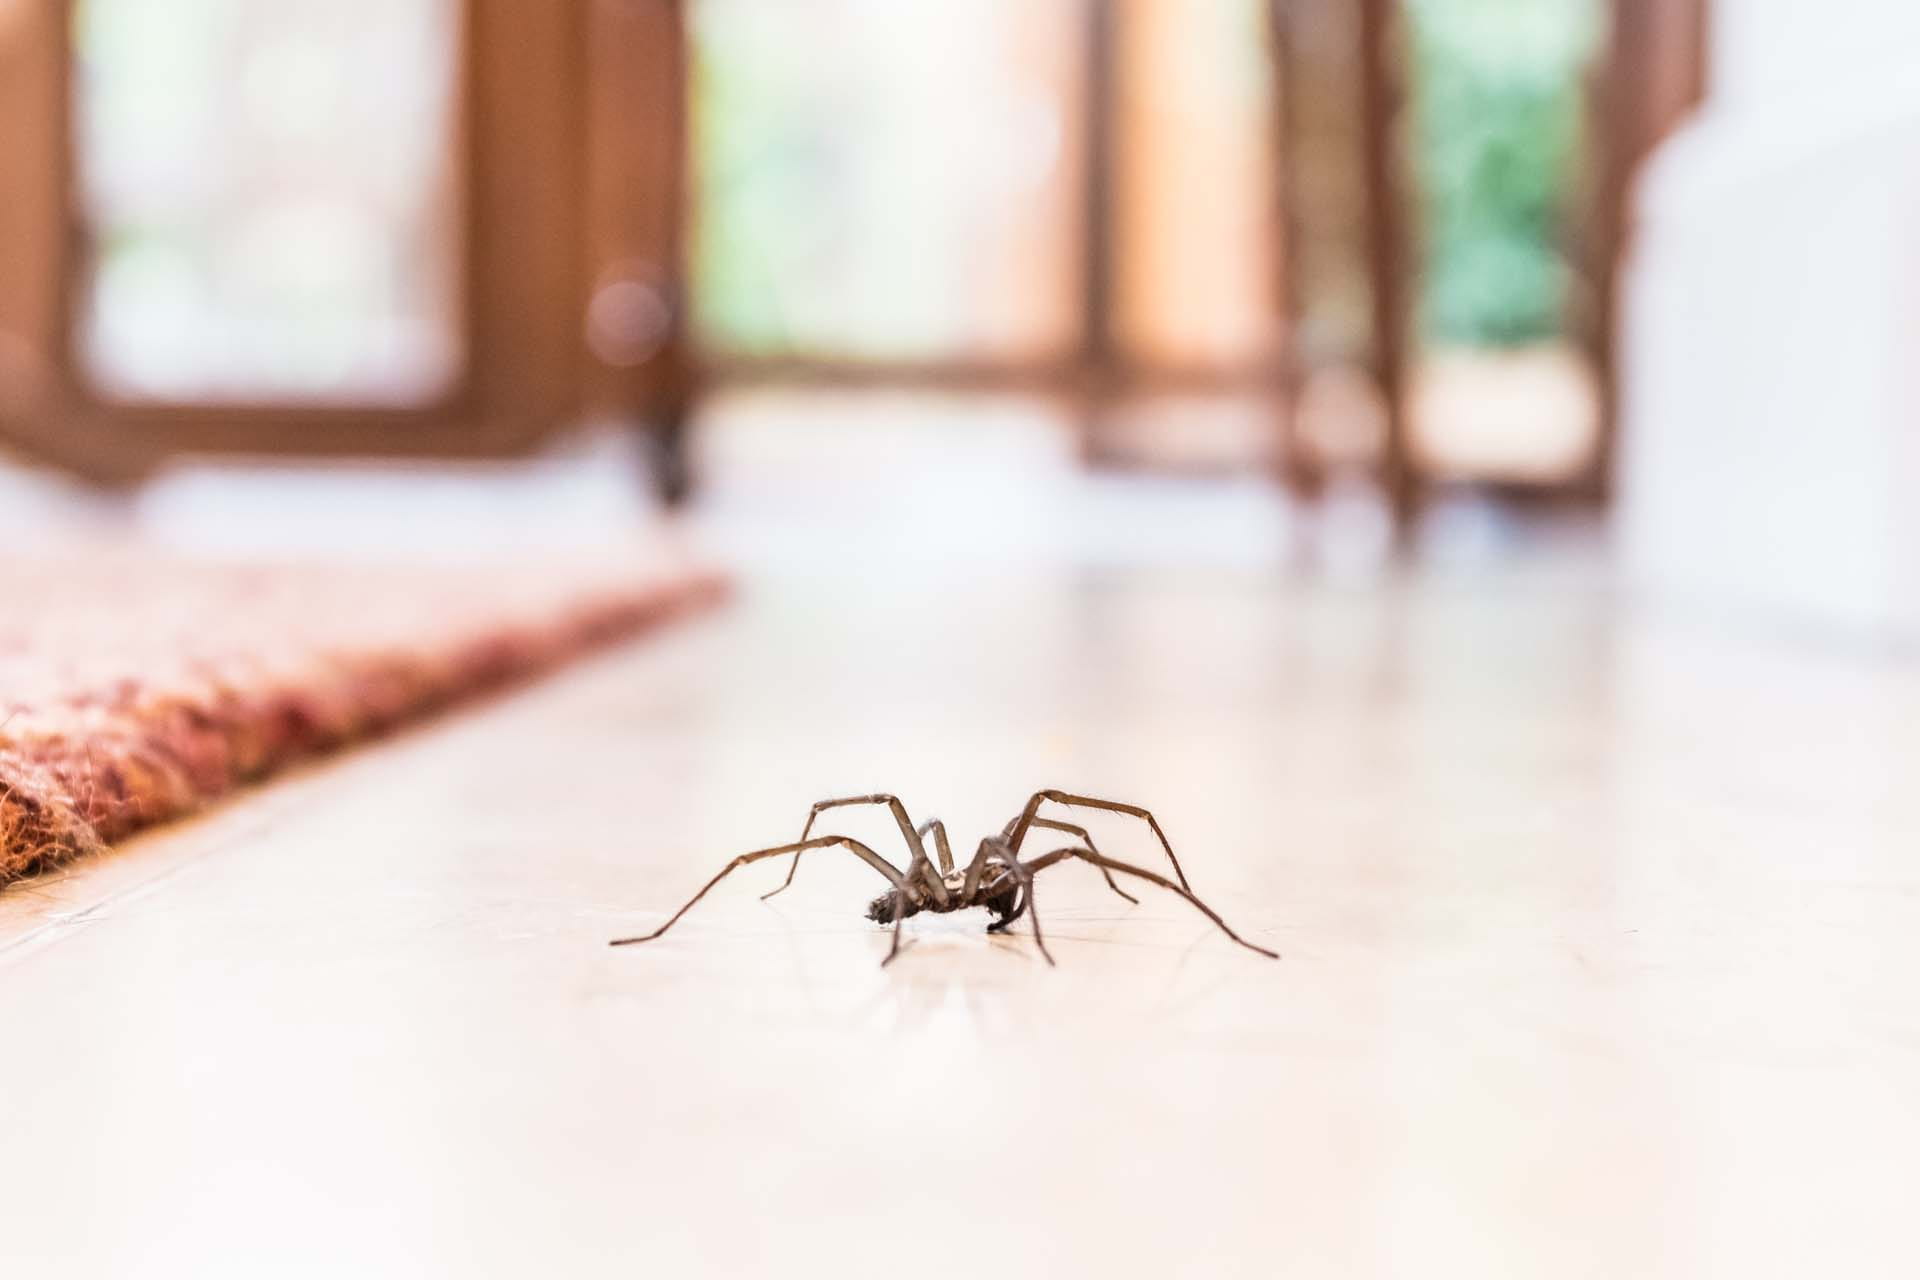 Spider on a hard floor